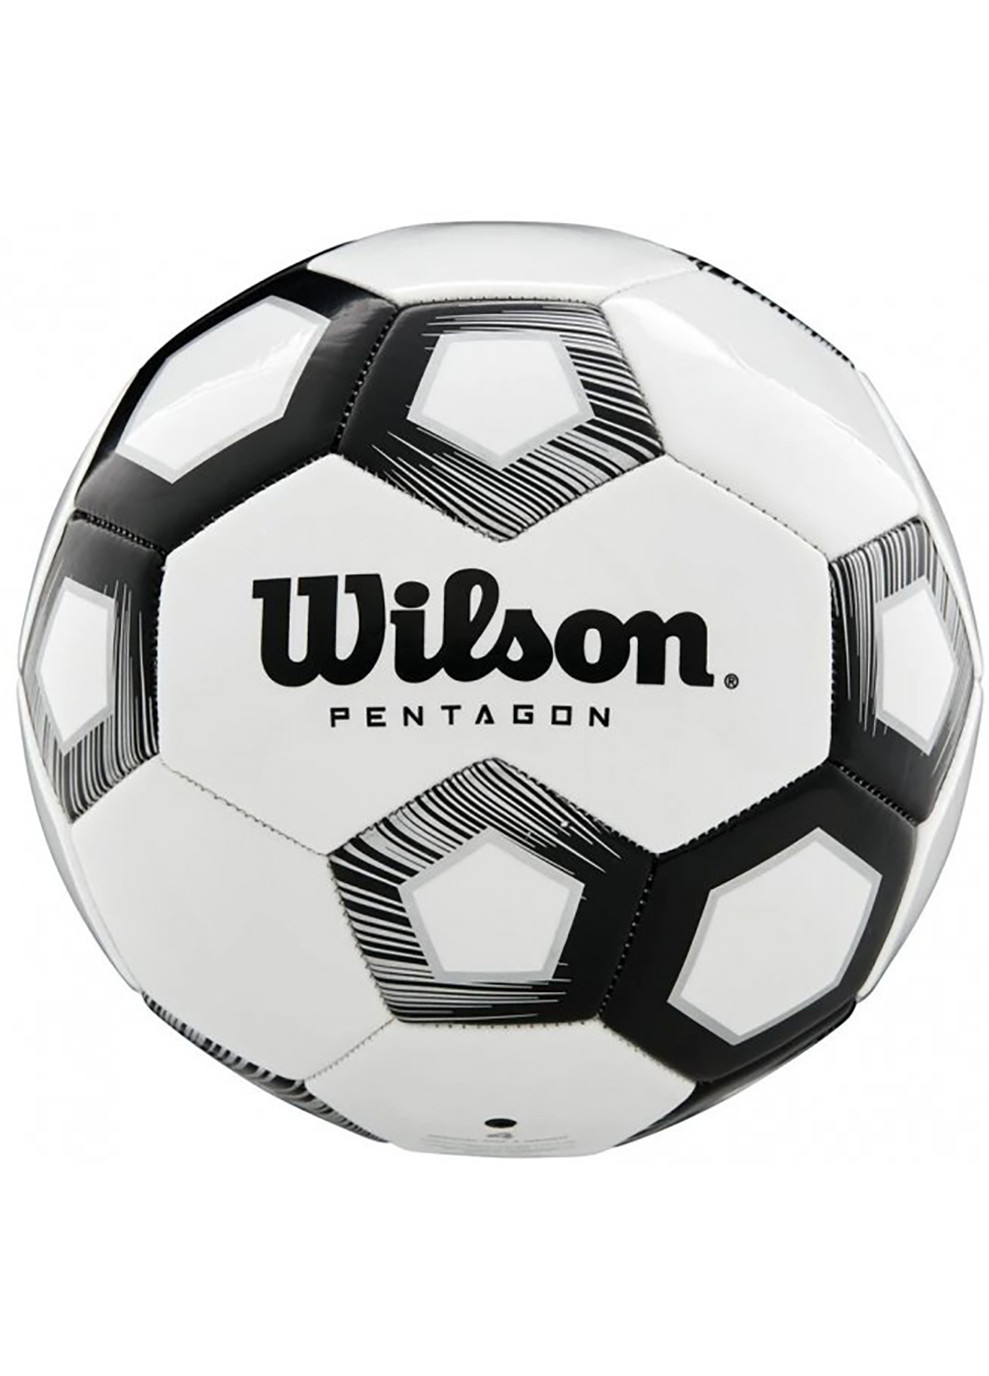 М'яч футбольний Pentagon white/black size 5 Wilson (260597401)